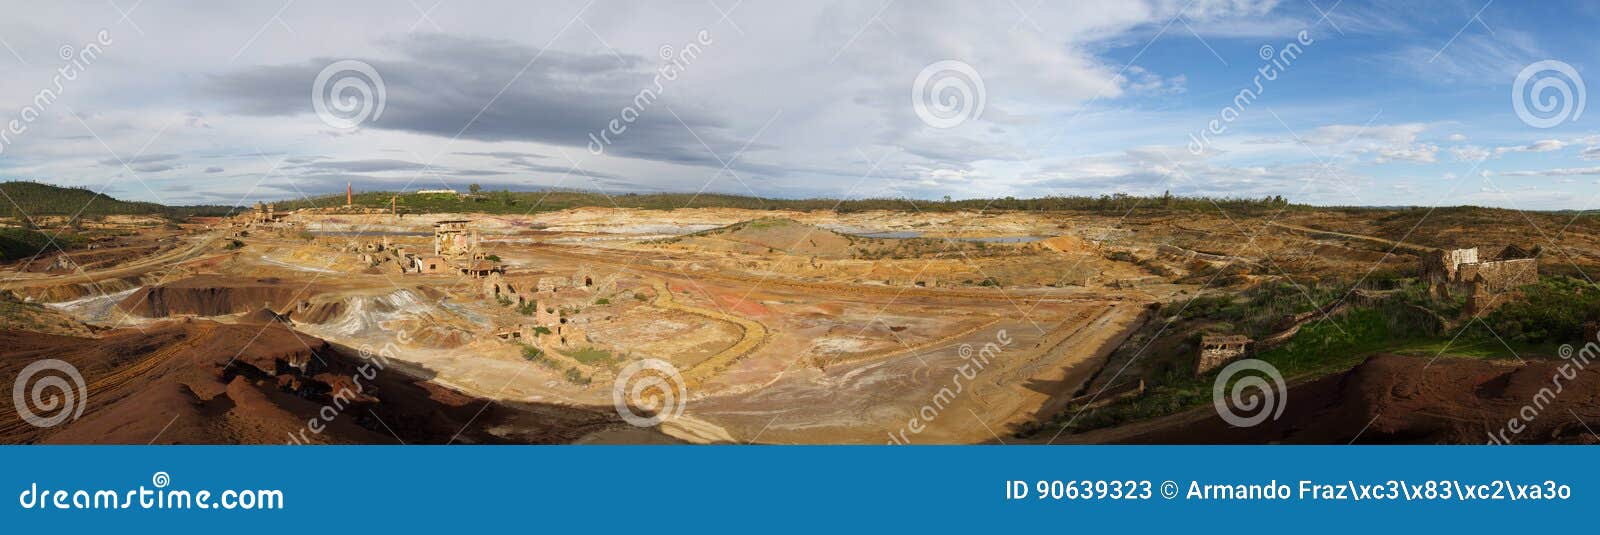 overview of achada do gamo area at sao domingos abandoned mine